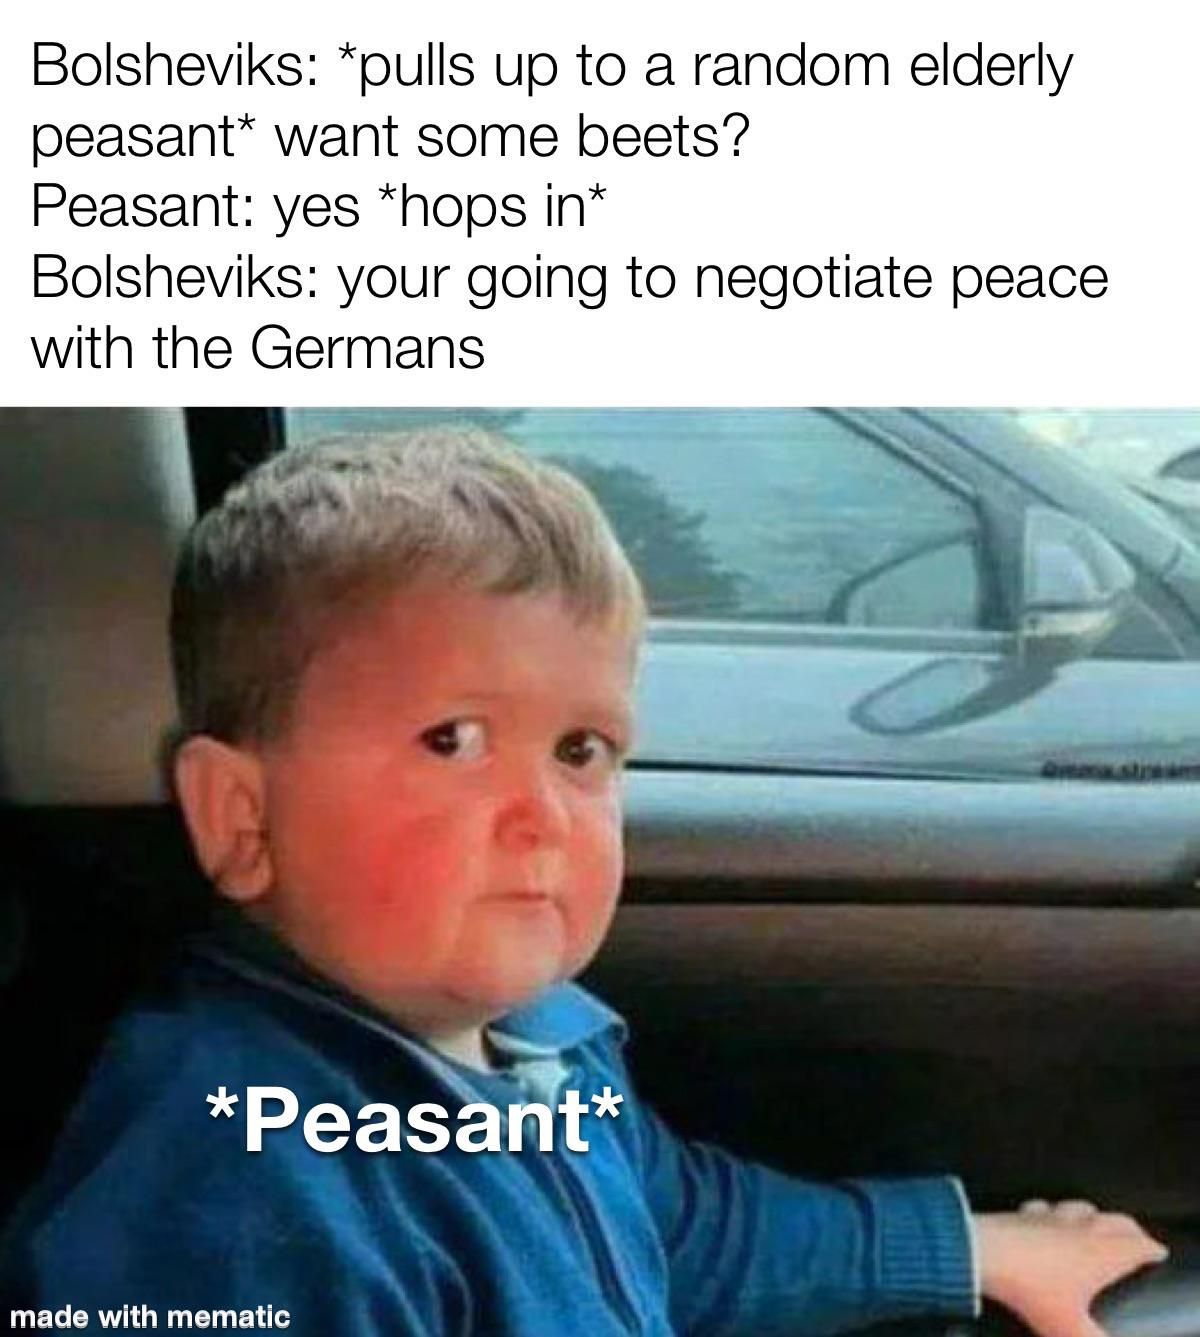 Peace negotiations anyone?